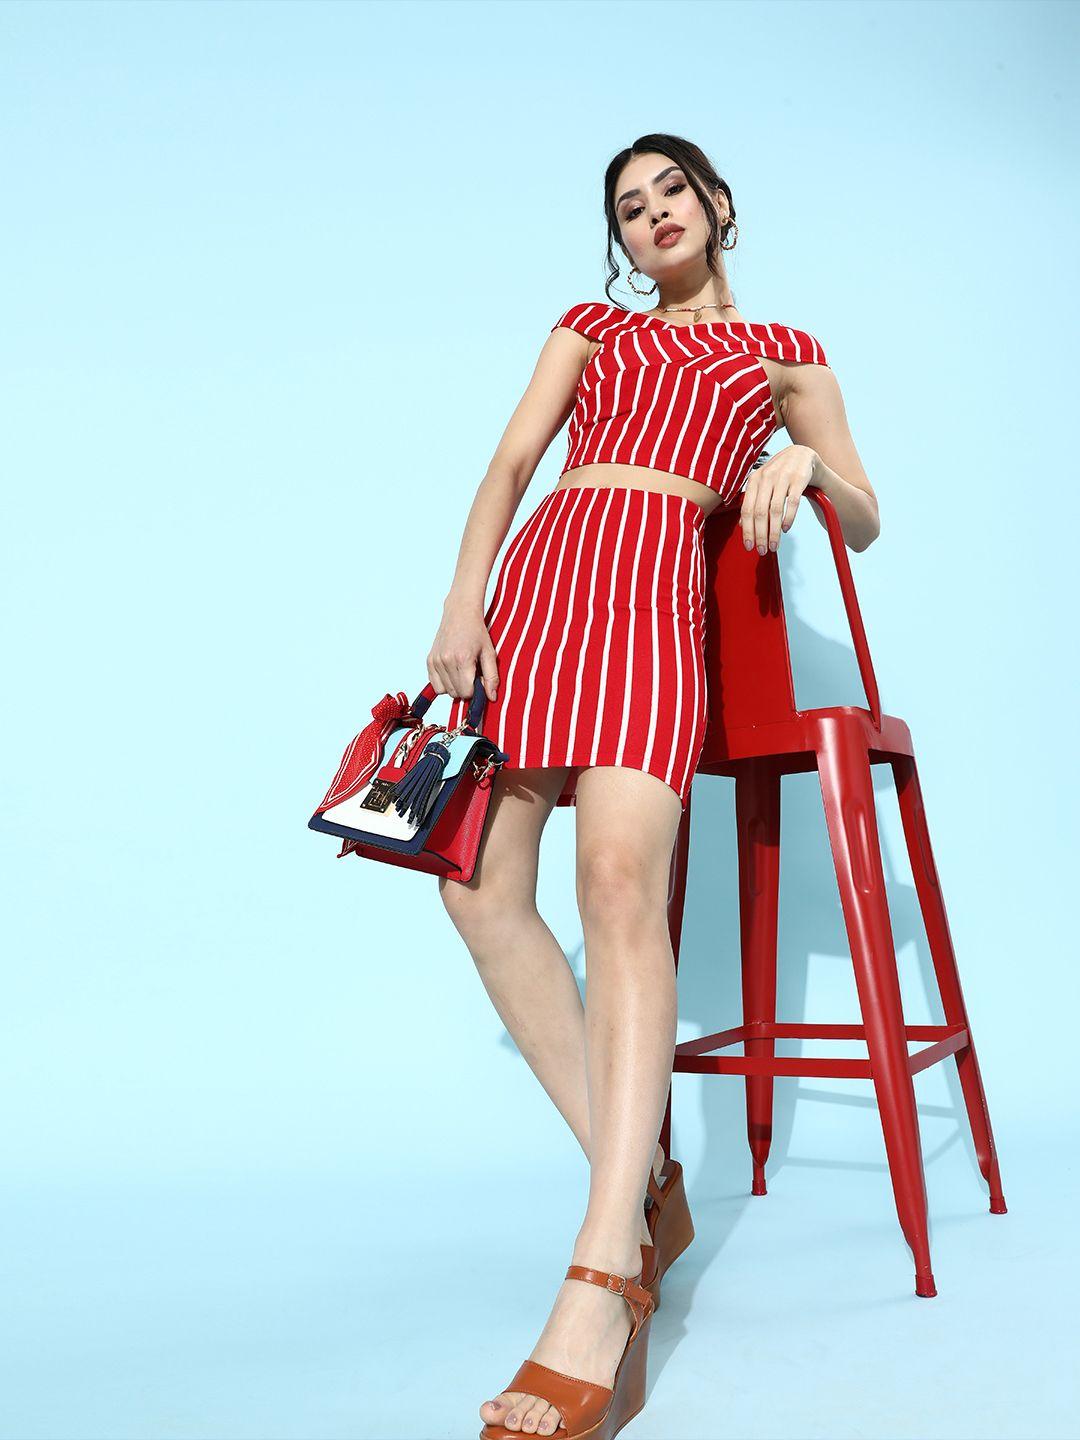 veni vidi vici women beautiful red striped co-ords dress